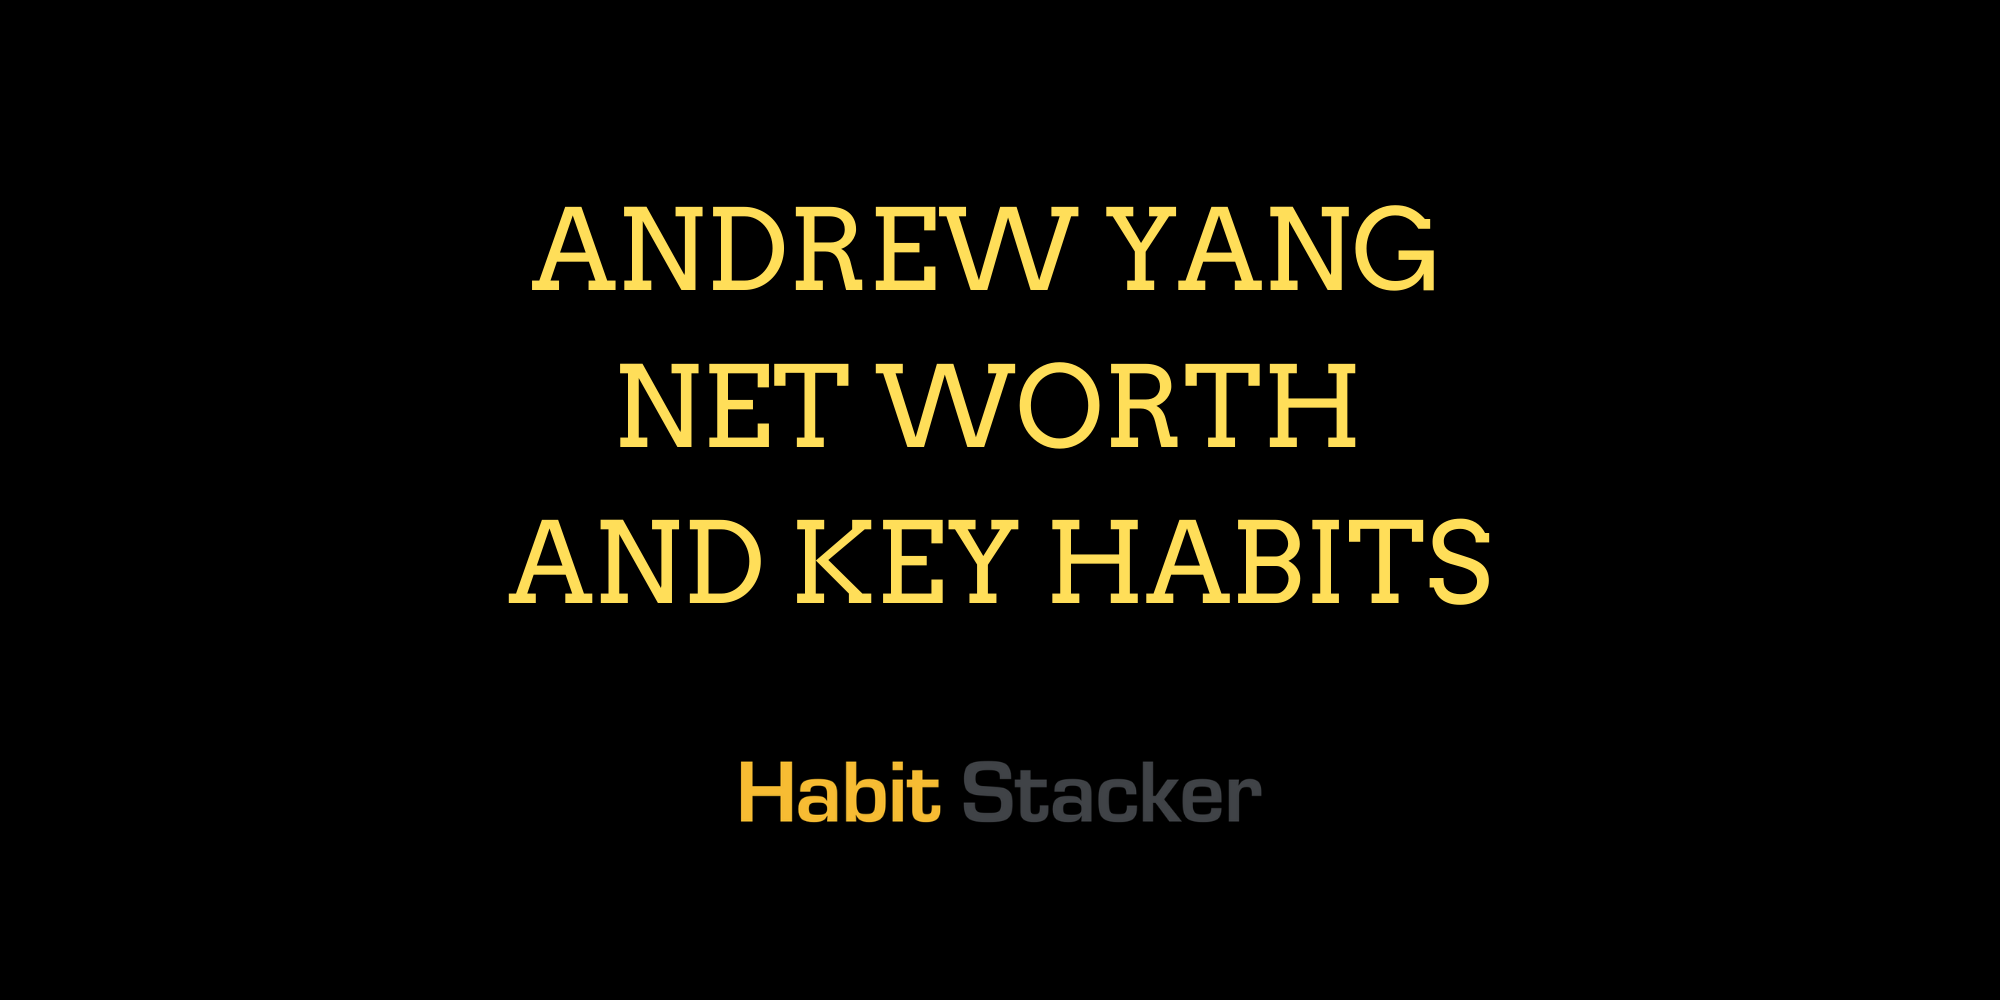 Andrew Yang Net Worth and Key Habits